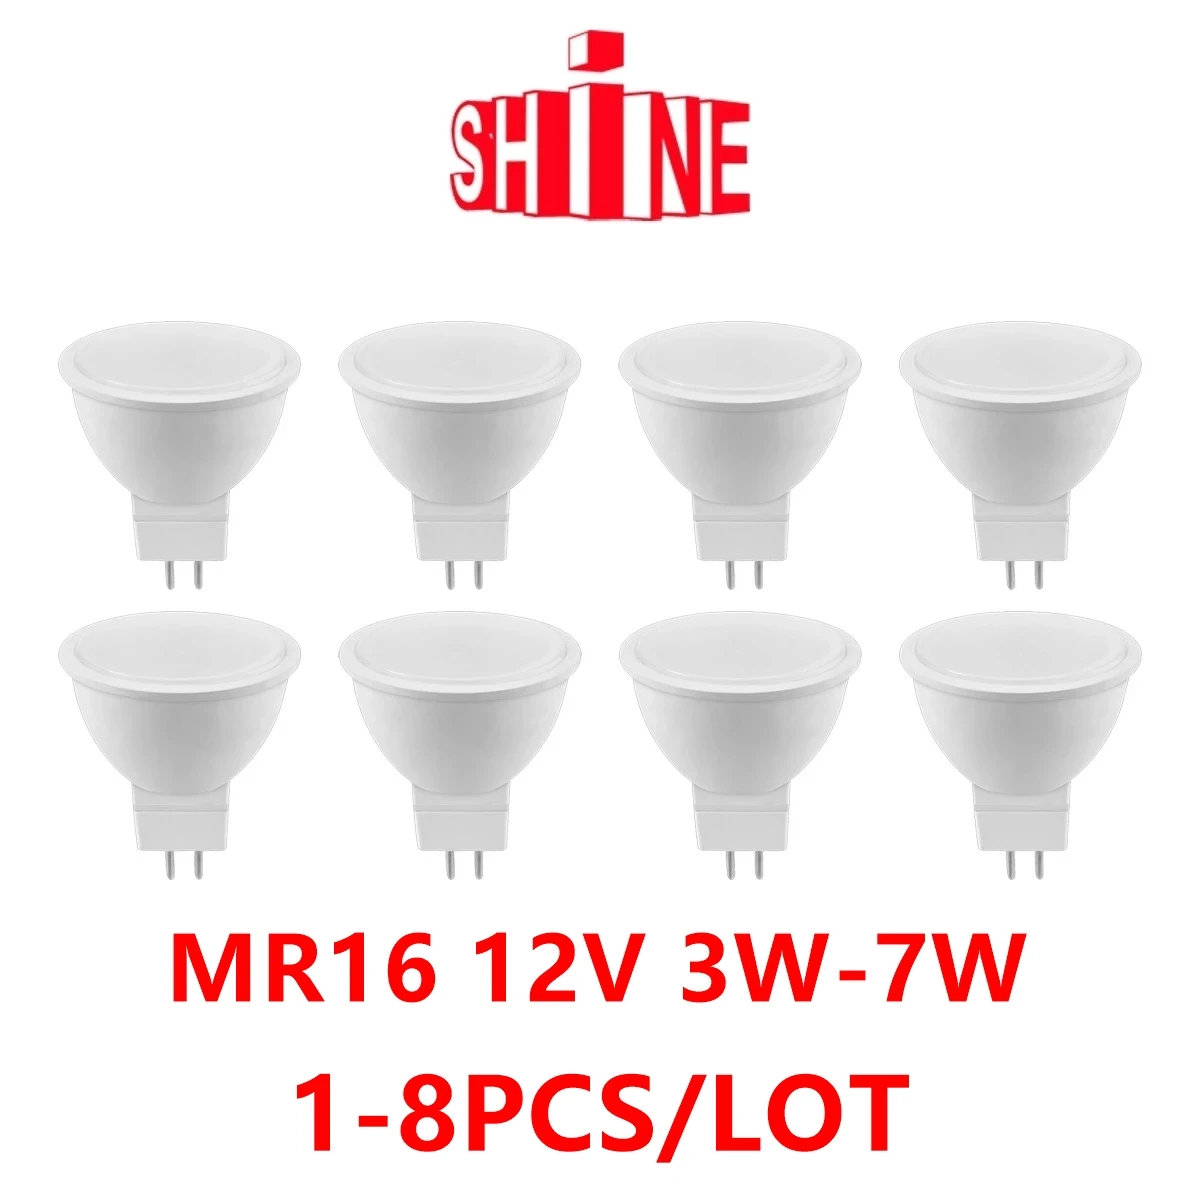 1-8PCS Spot Foco MR16 AC DC12V 3W 5W 6W 7W Warm White Day Light LED Light Lamp For Home Decoration Replace 50W Halogen Spotlight